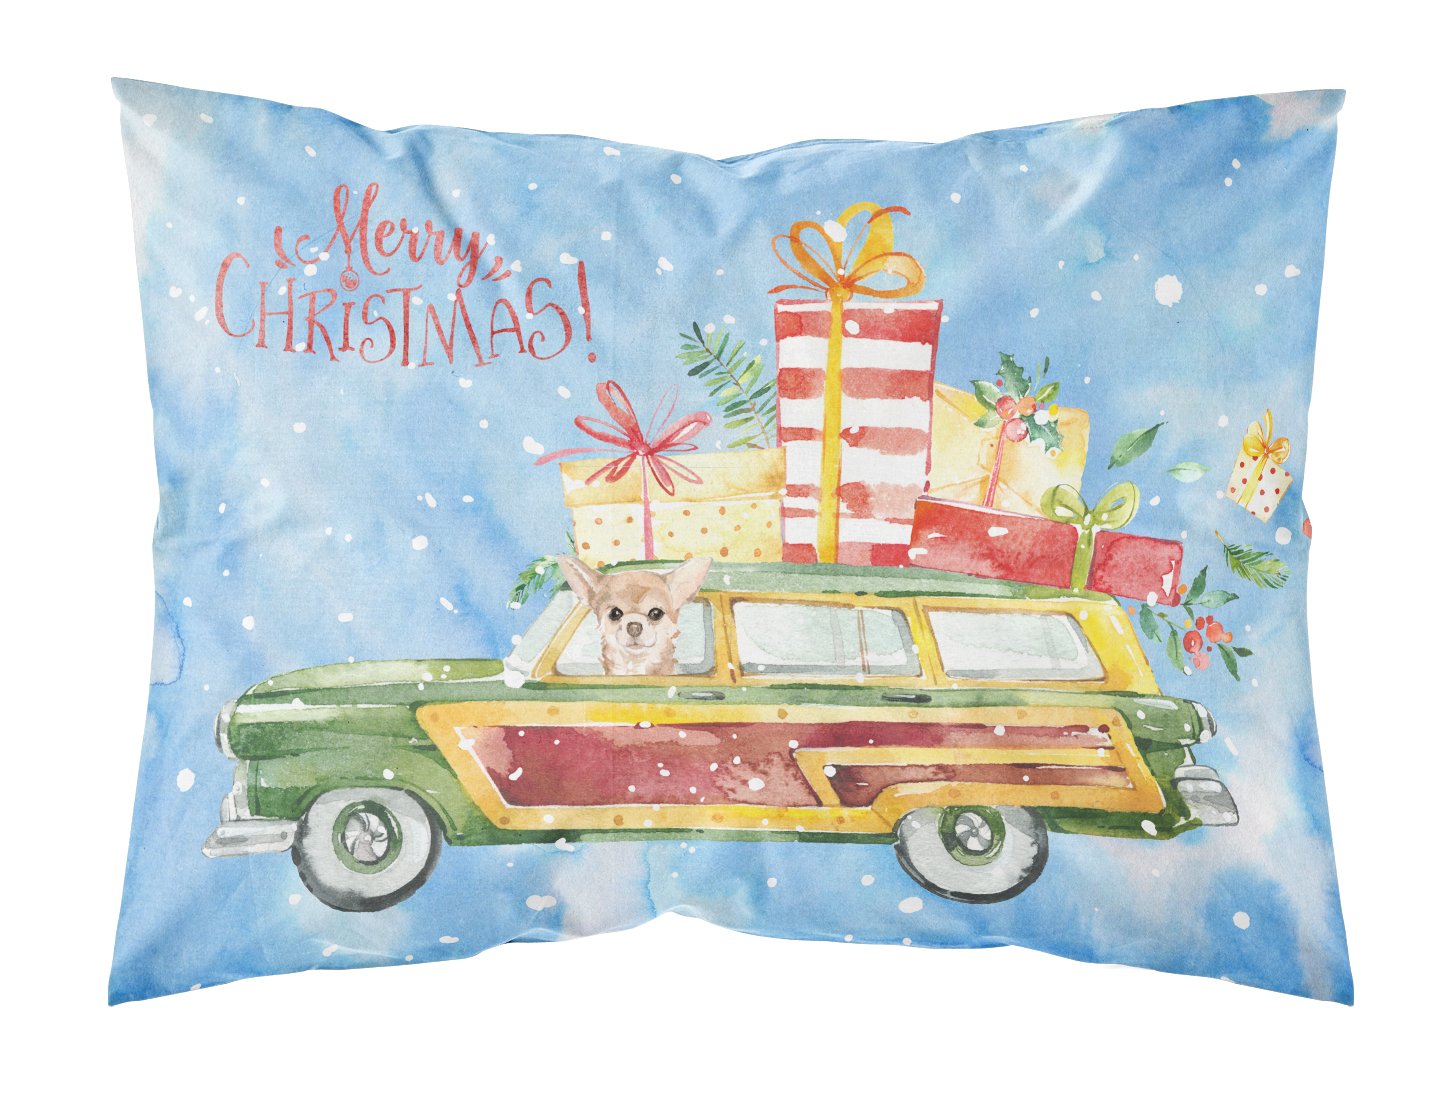 Merry Christmas Chihuahua Fabric Standard Pillowcase CK2449PILLOWCASE by Caroline's Treasures